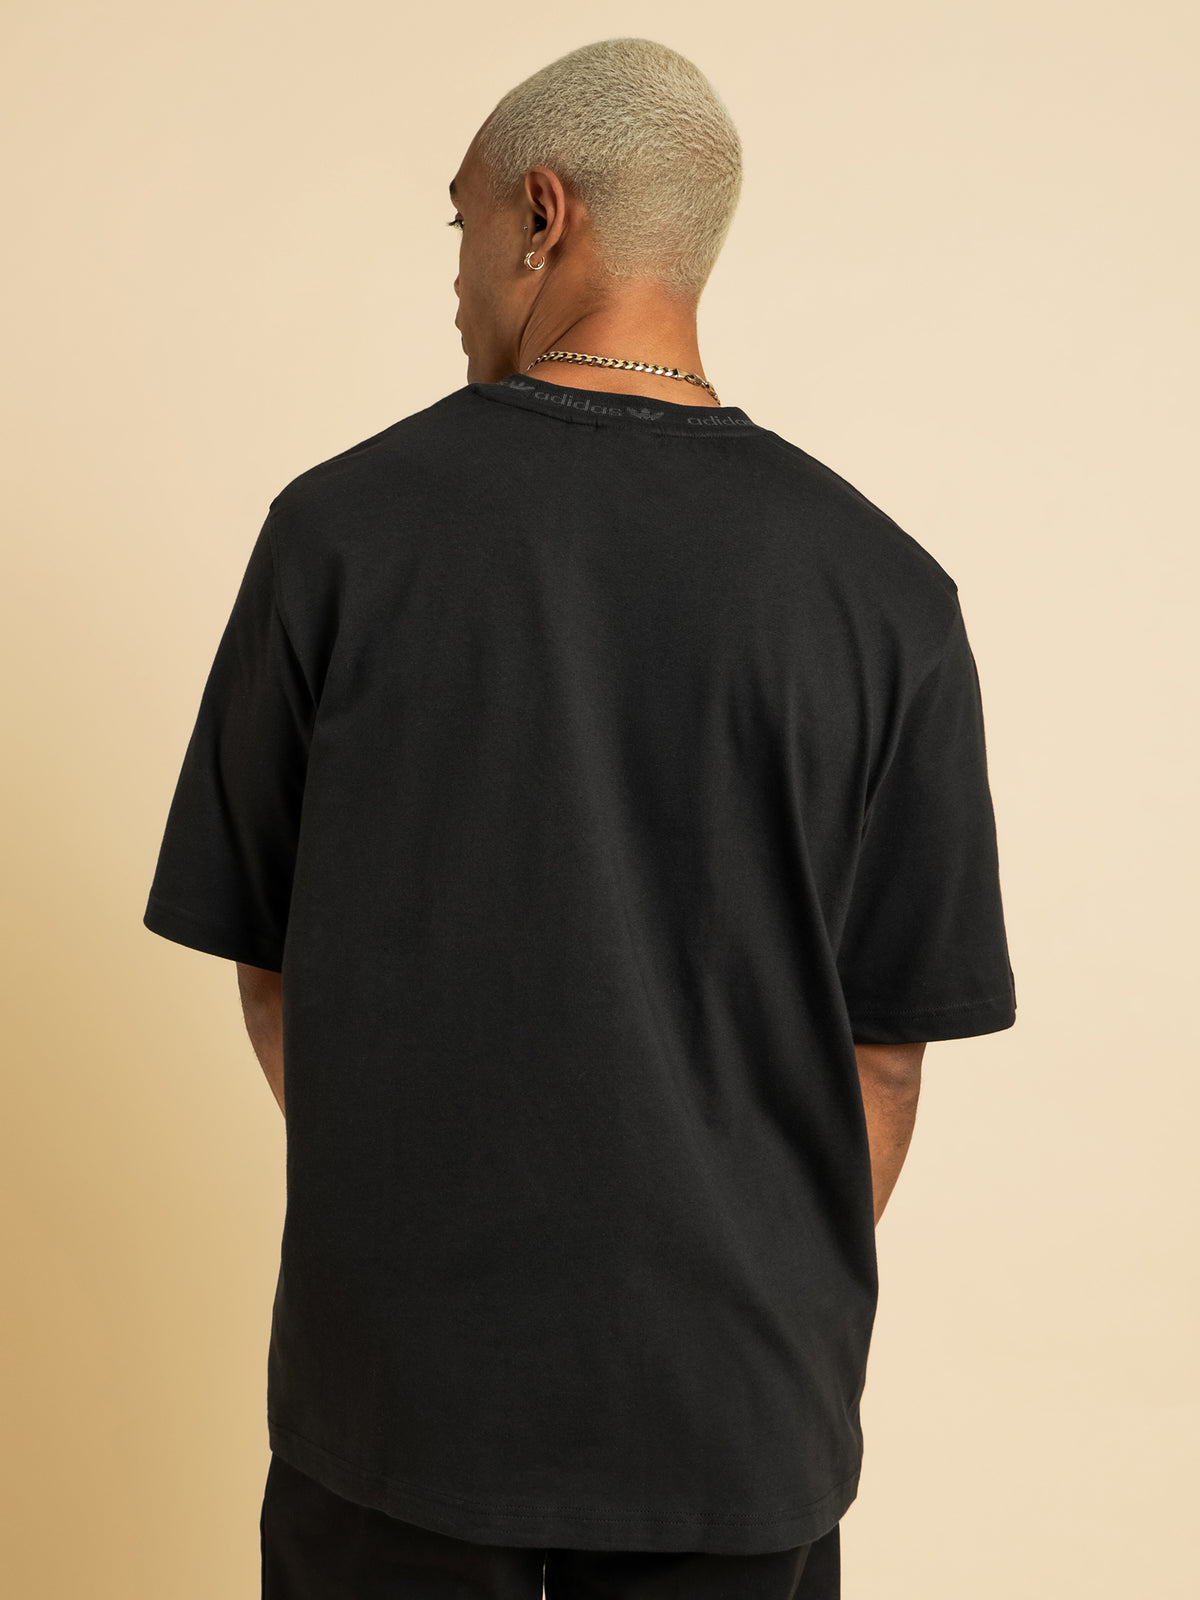 Rib Detail T-Shirt in Black